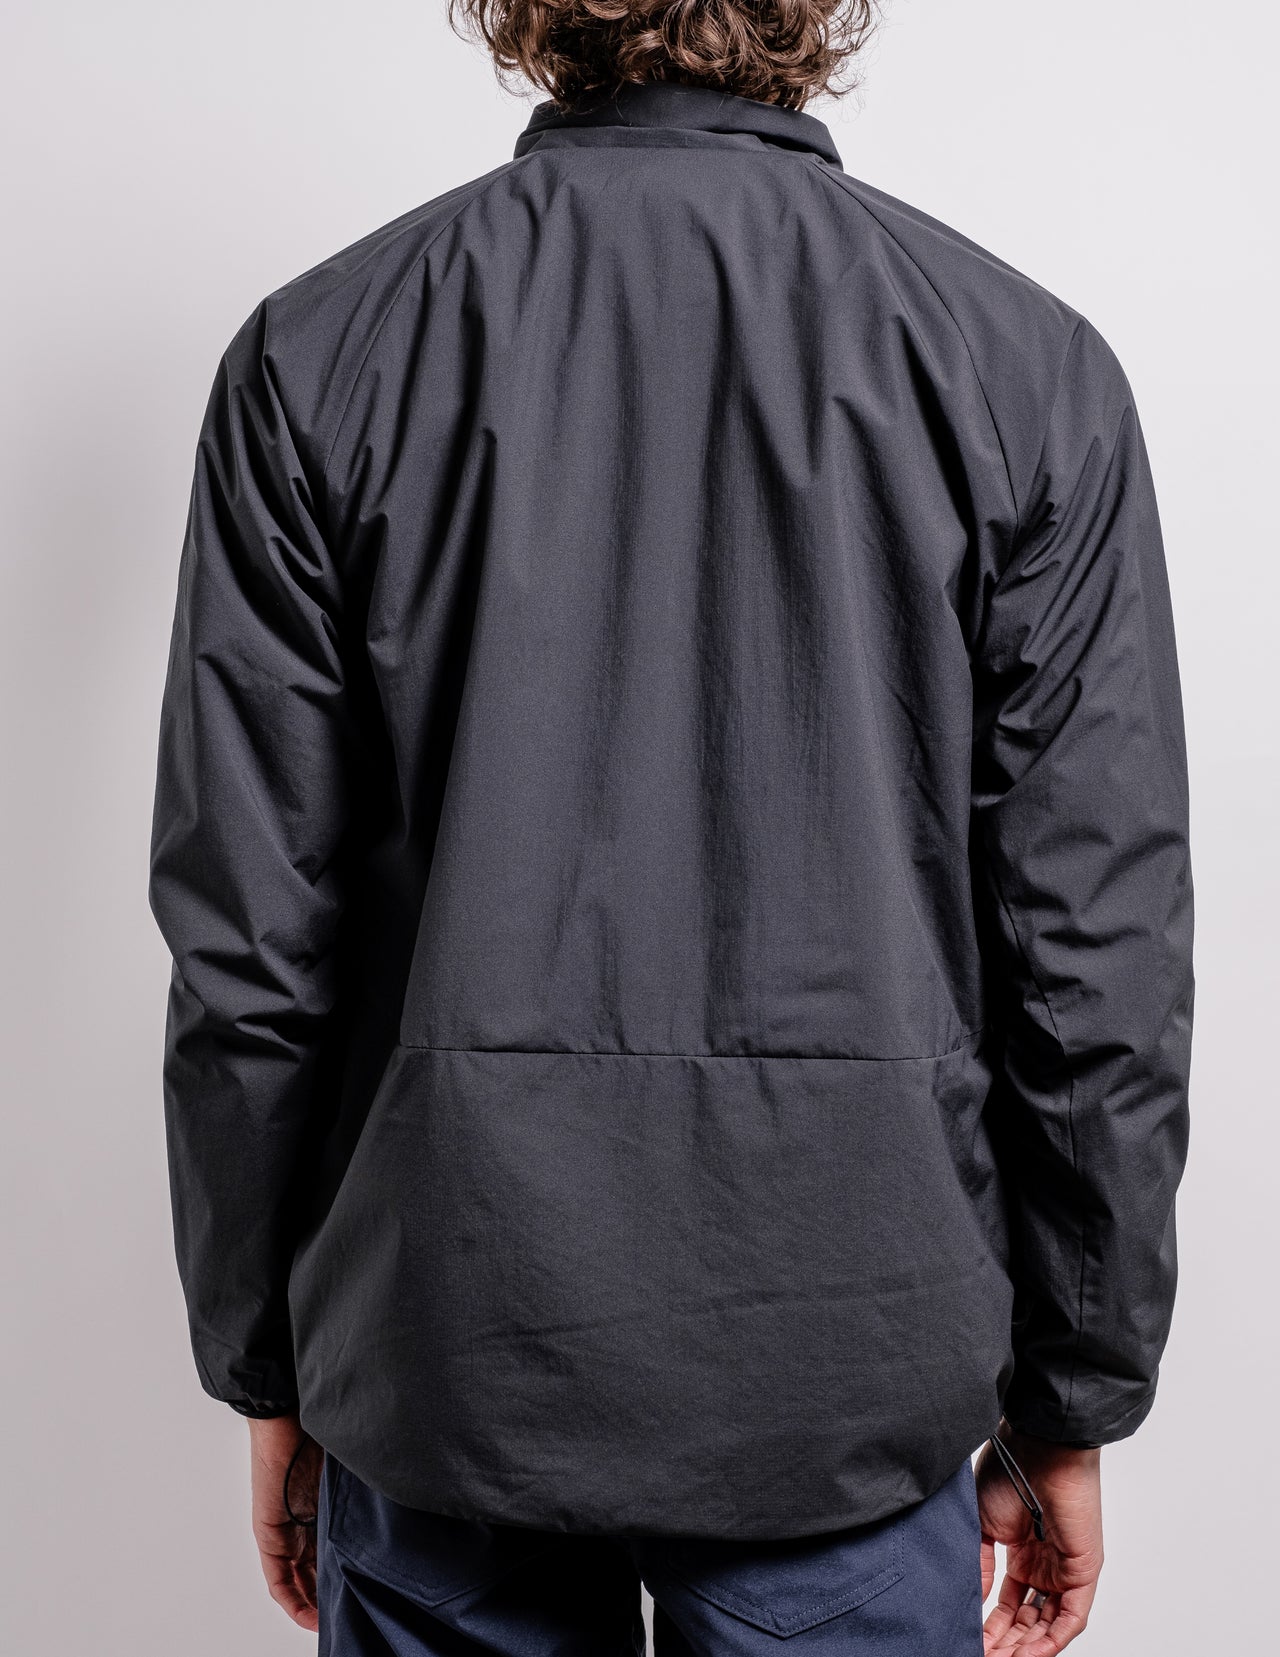 2-Layer Octa Jacket in Black